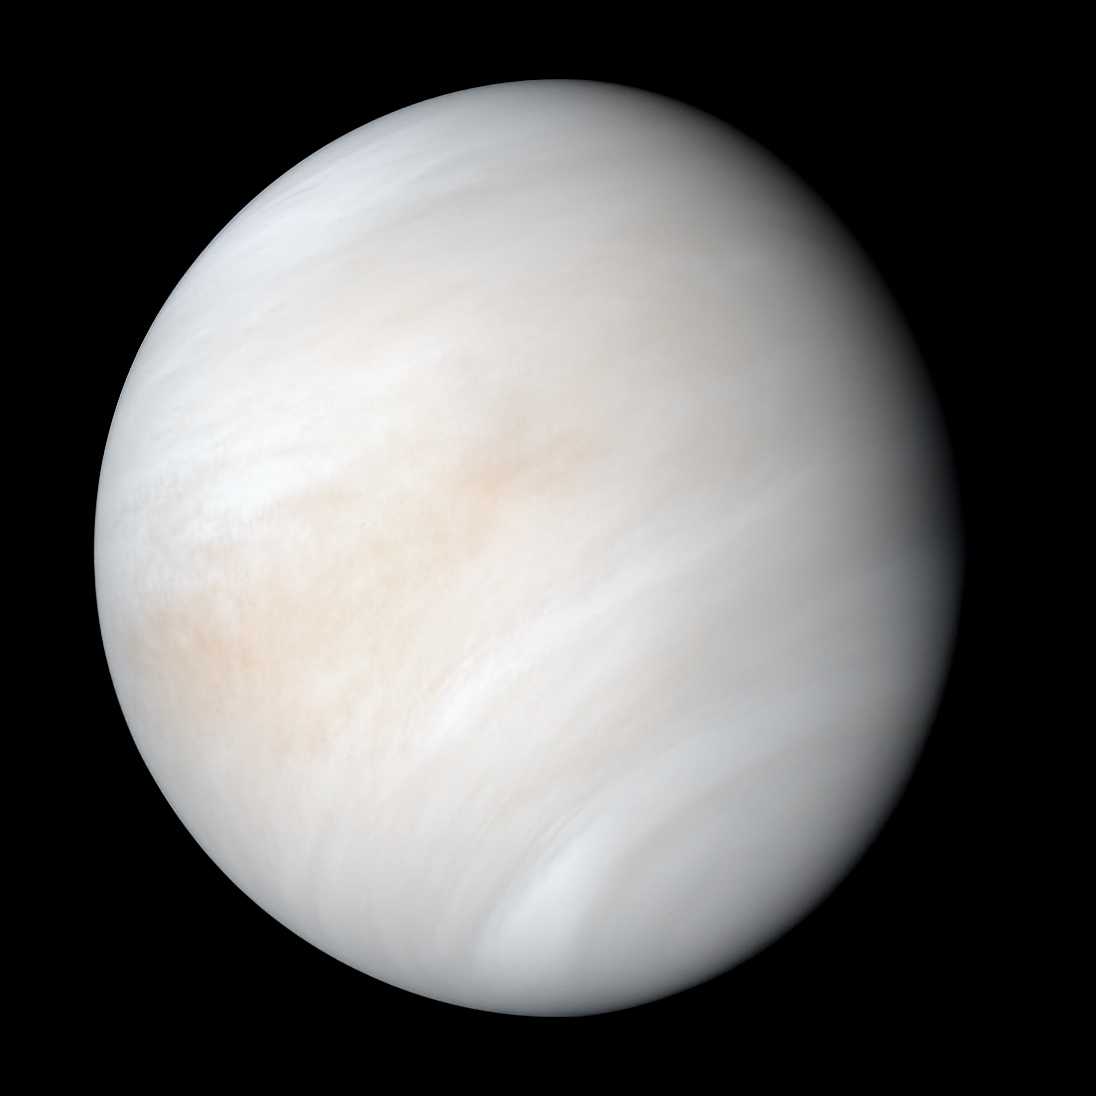 Image taken of Venus by NASA's Mariner 10 spacecraft in 1974 Image Credit: NASA/JPL-Caltech